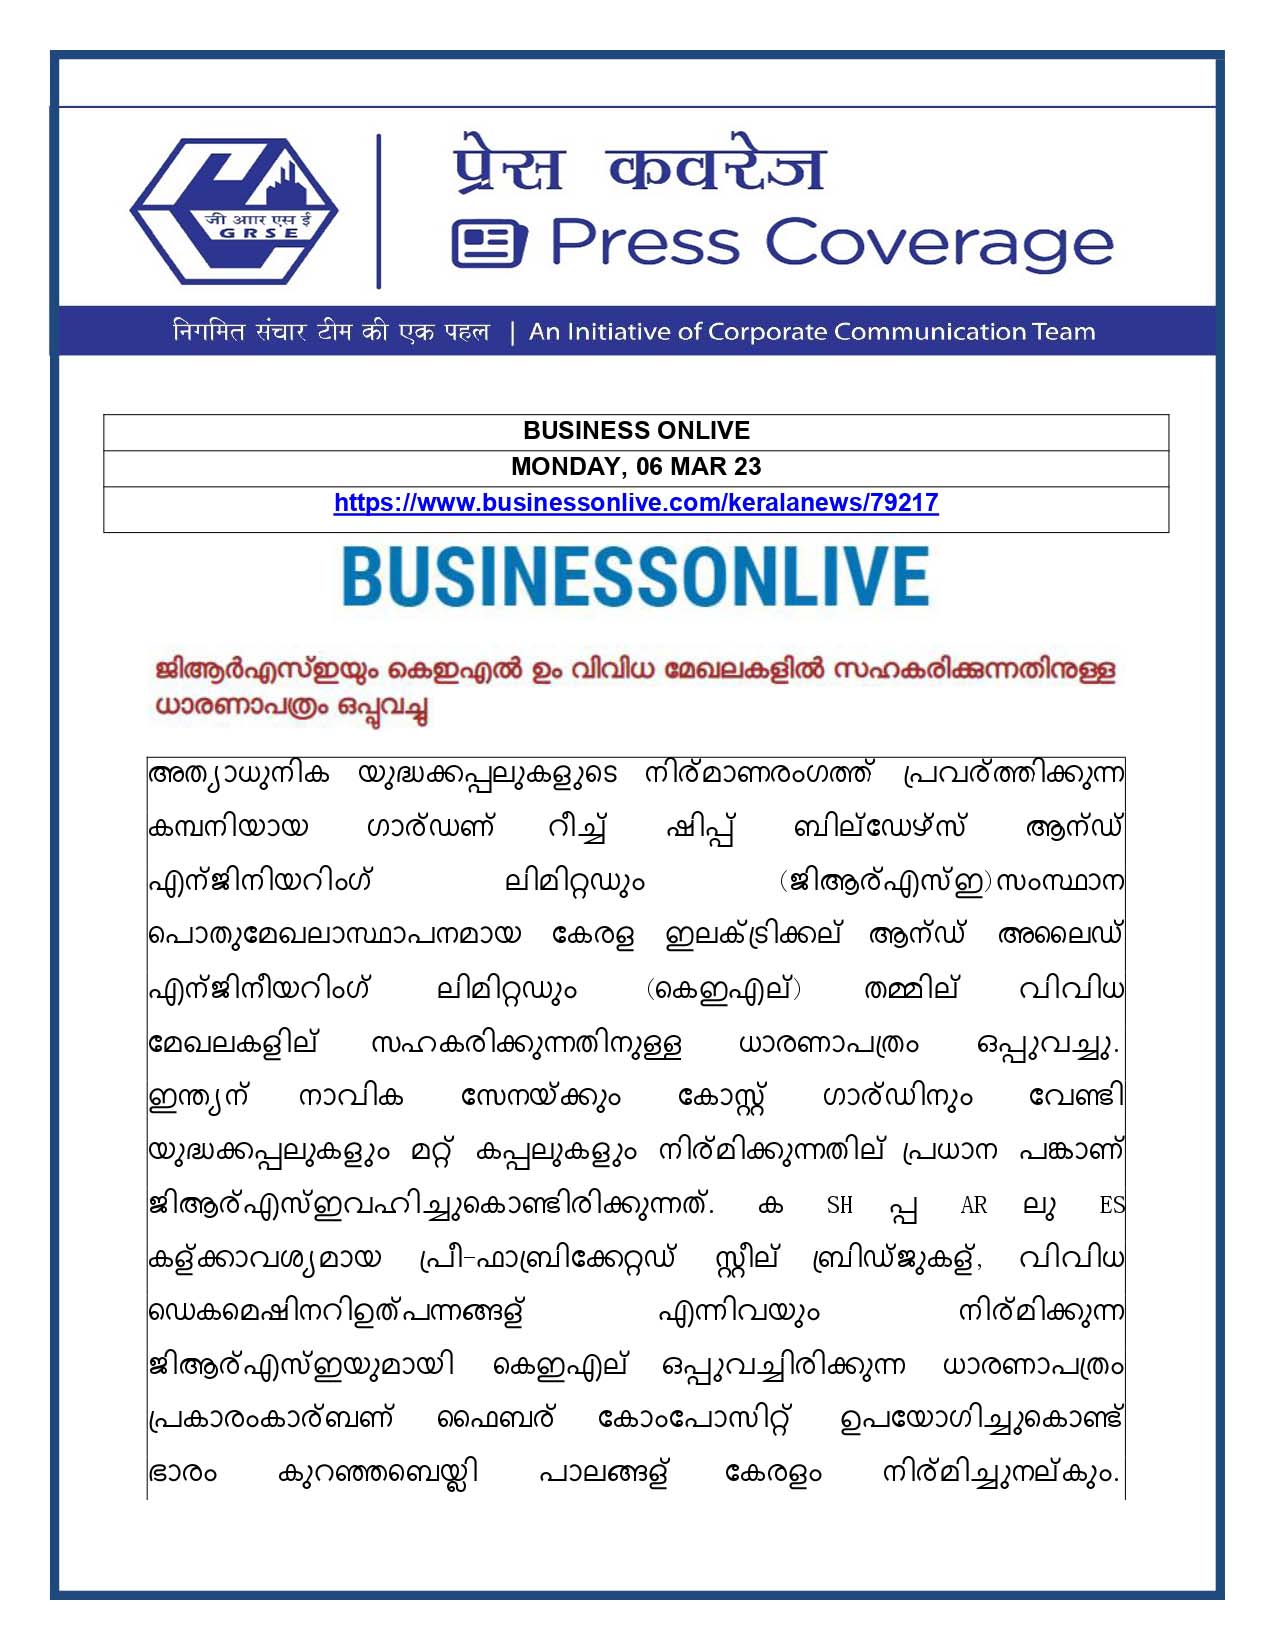 Business Onlive 06 Mar 23